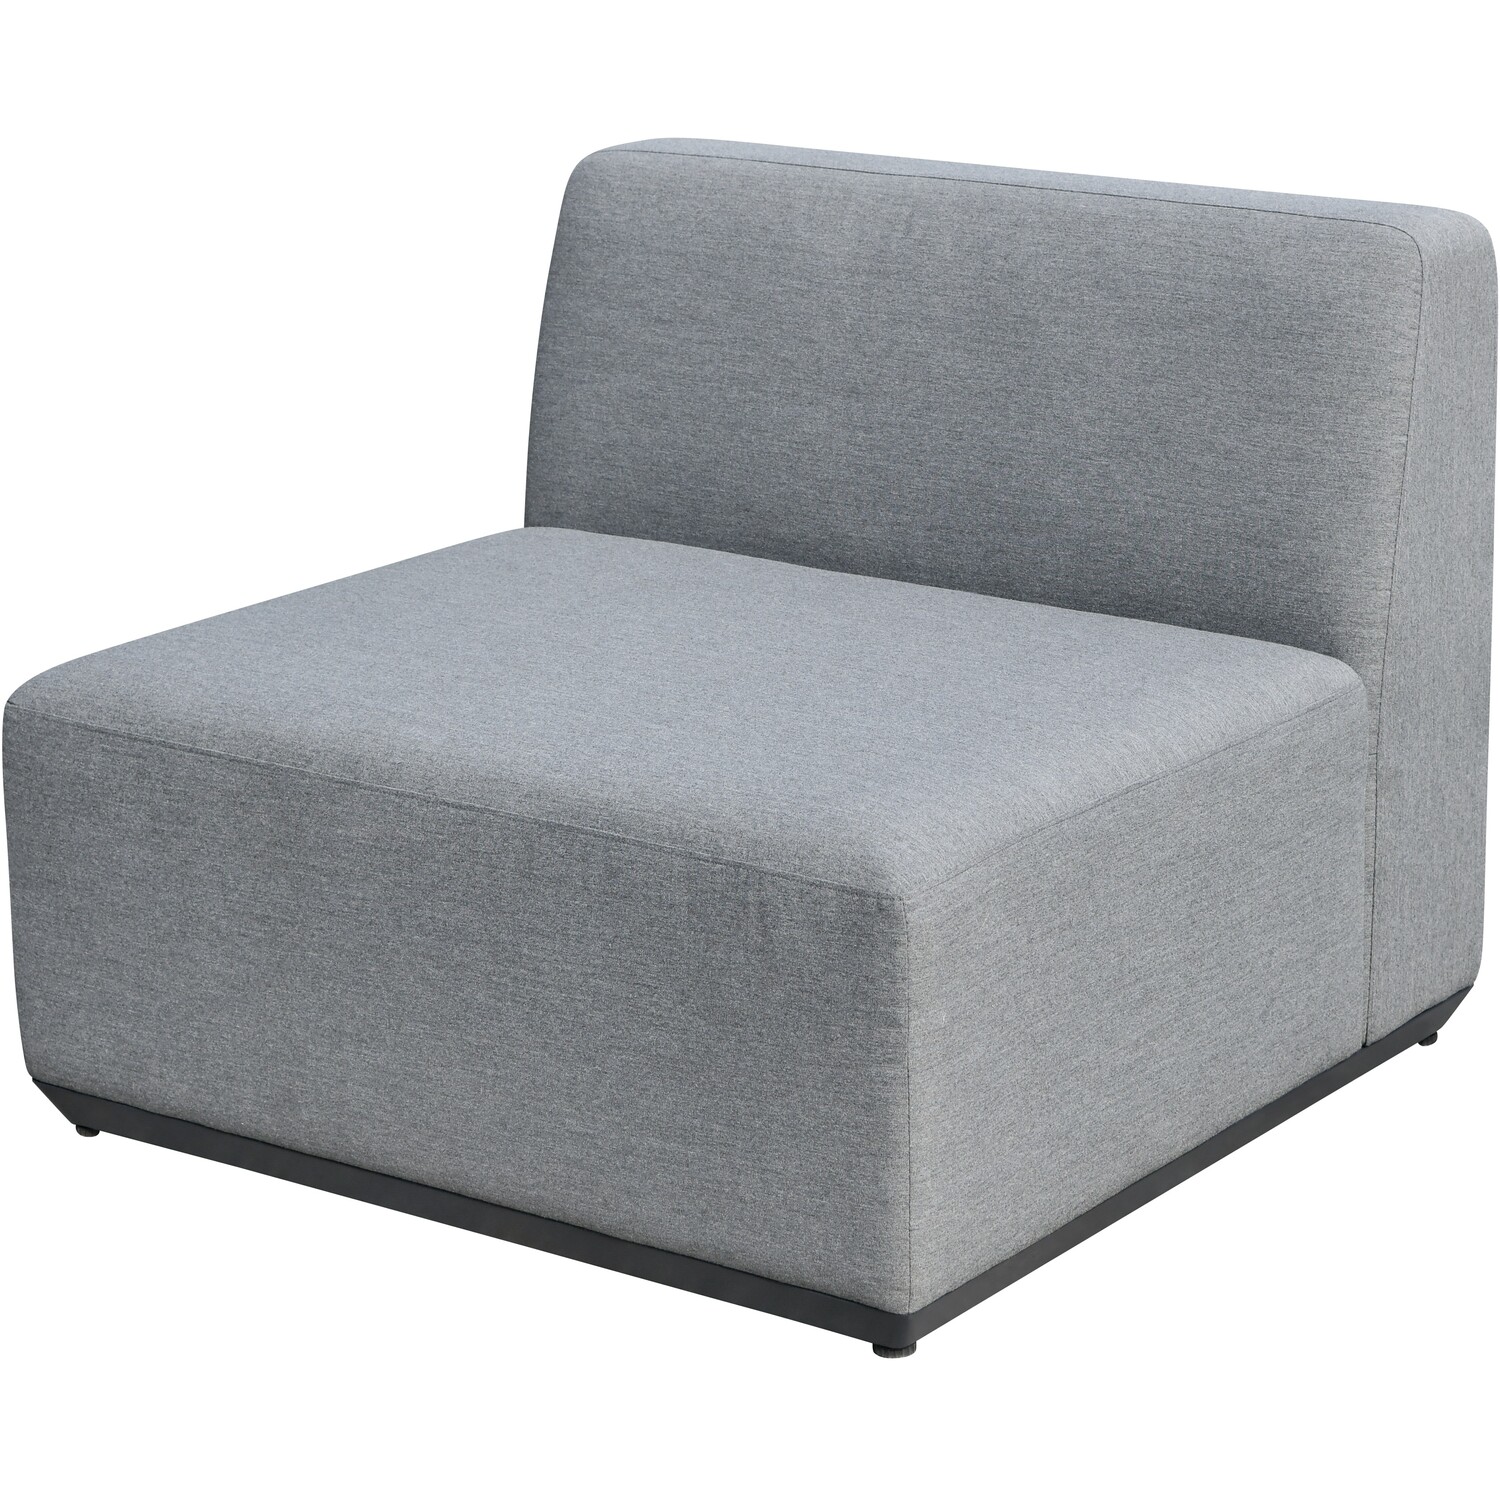 Malay Deluxe Cadiz 4 Seater Grey Sofa Lounge Set Image 4